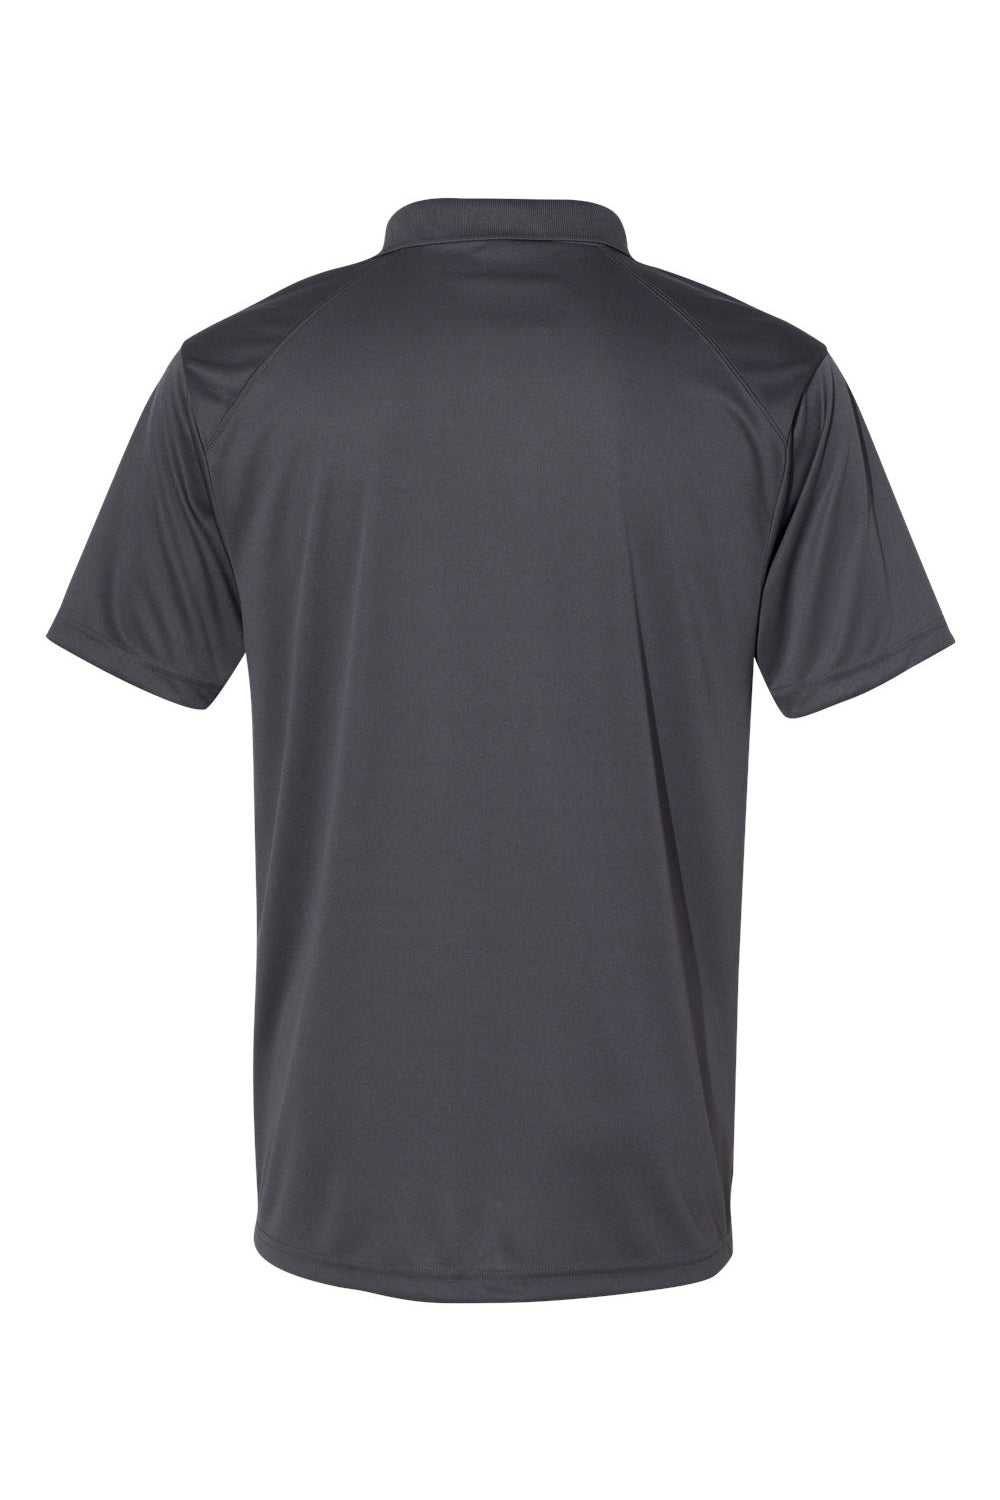 C2 Sport 5900 Mens Utility Moisture Wicking Short Sleeve Polo Shirt Graphite Grey Flat Back